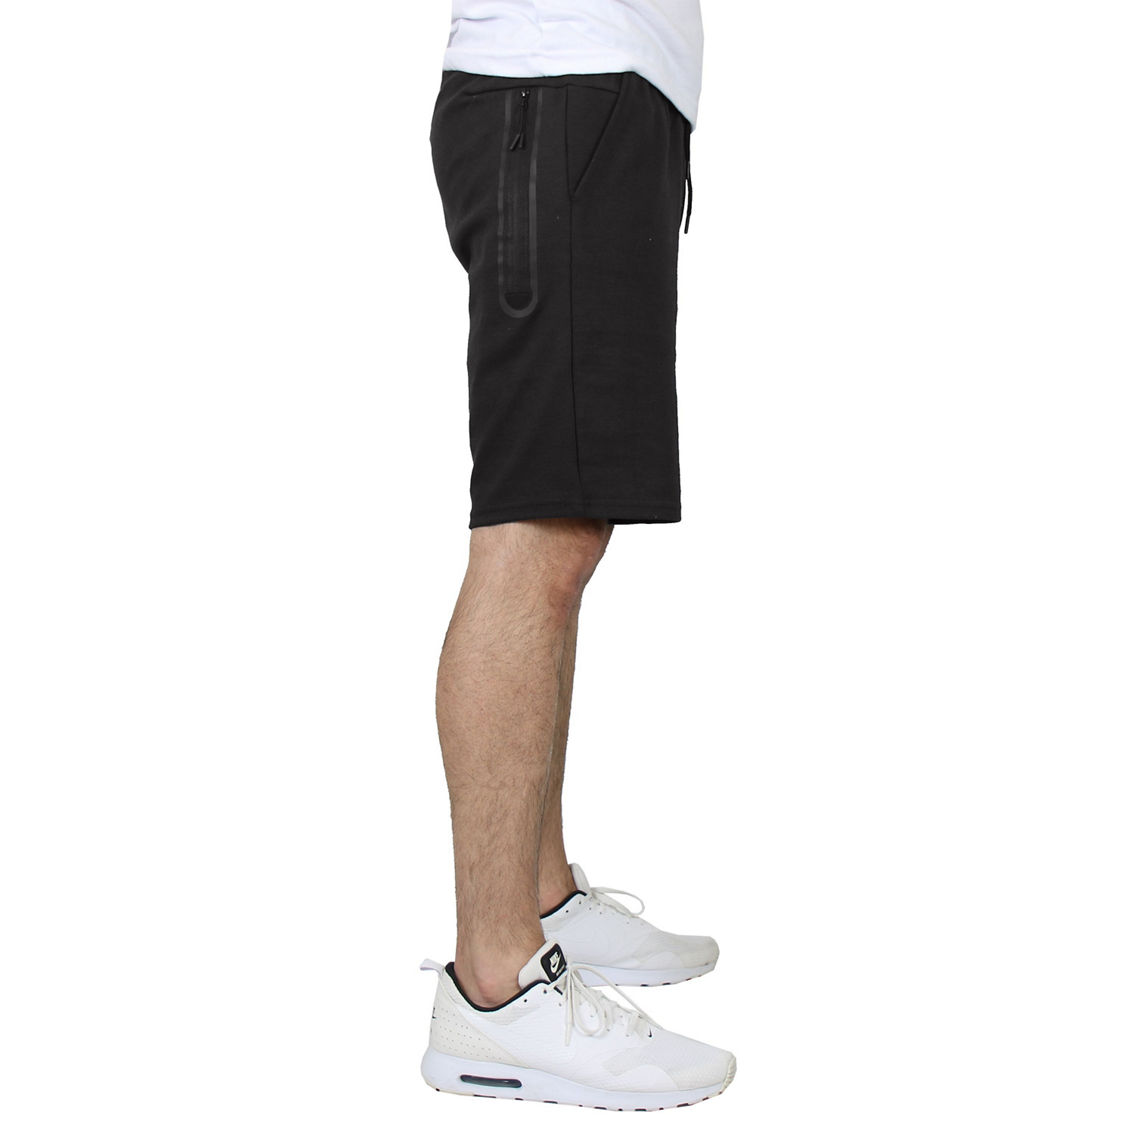 Men's Tech Fleece Performance Shorts With Heat Seal Zipper Pocket - Image 2 of 4